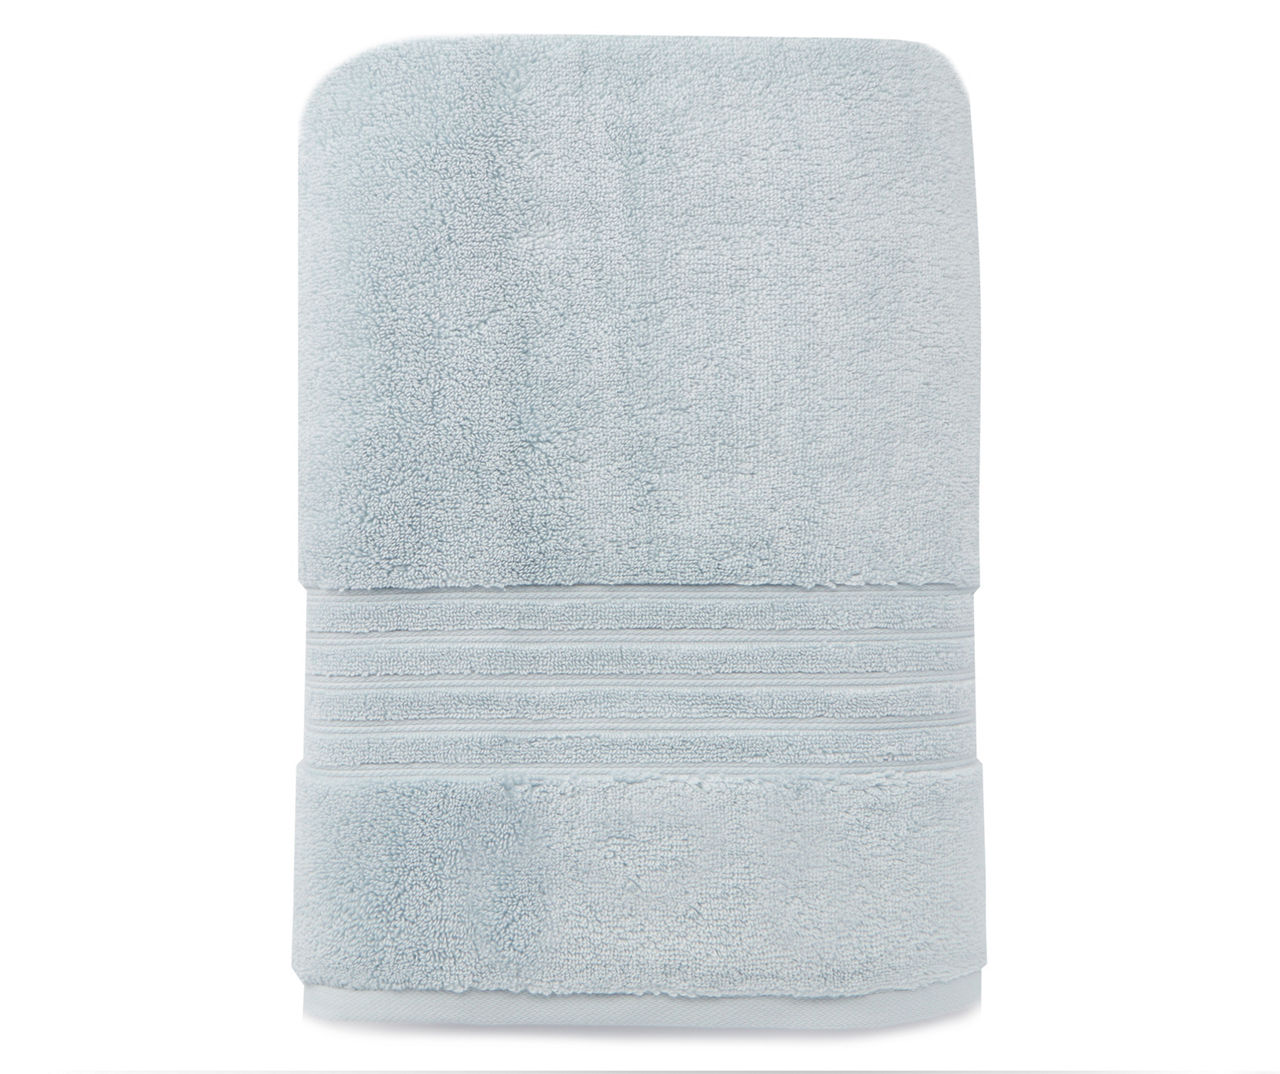 Broyhill Egyptian Cotton Towel